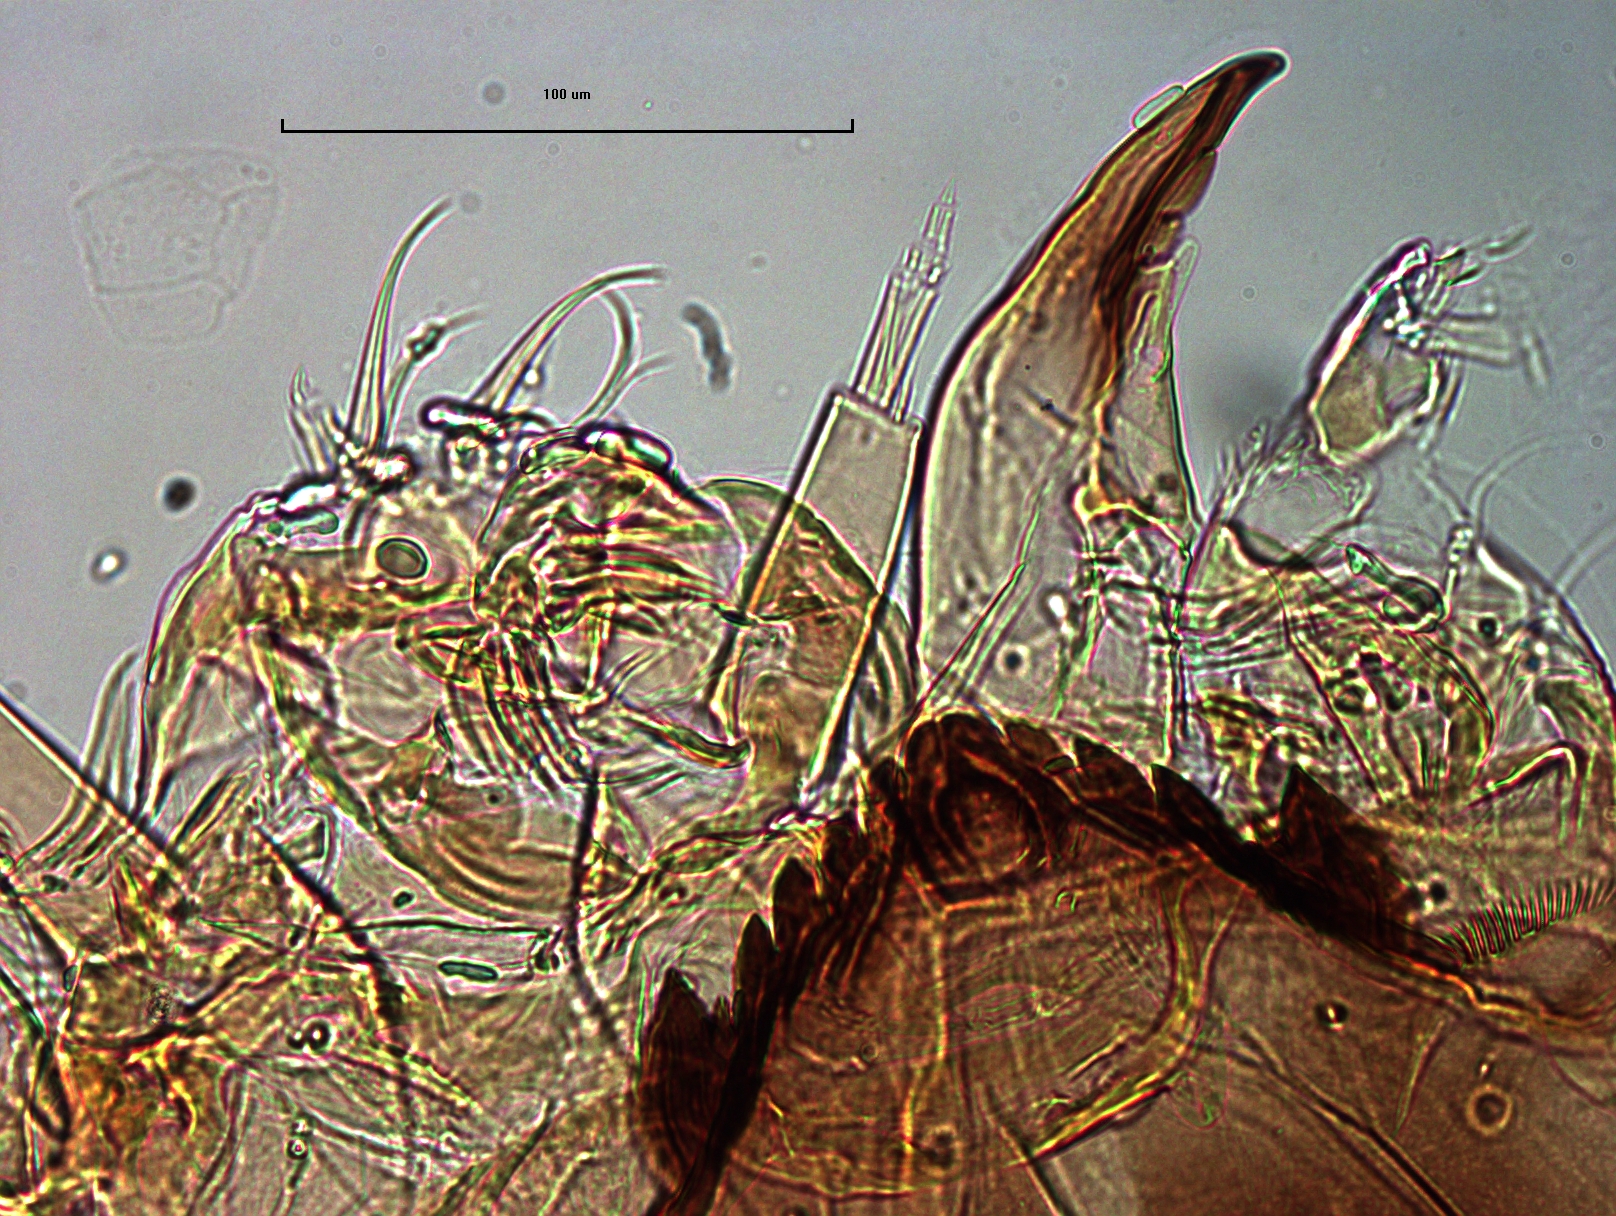 photomicrograph of a chironomid midge larva head capsule showing mandibles, antennae, and premandibles